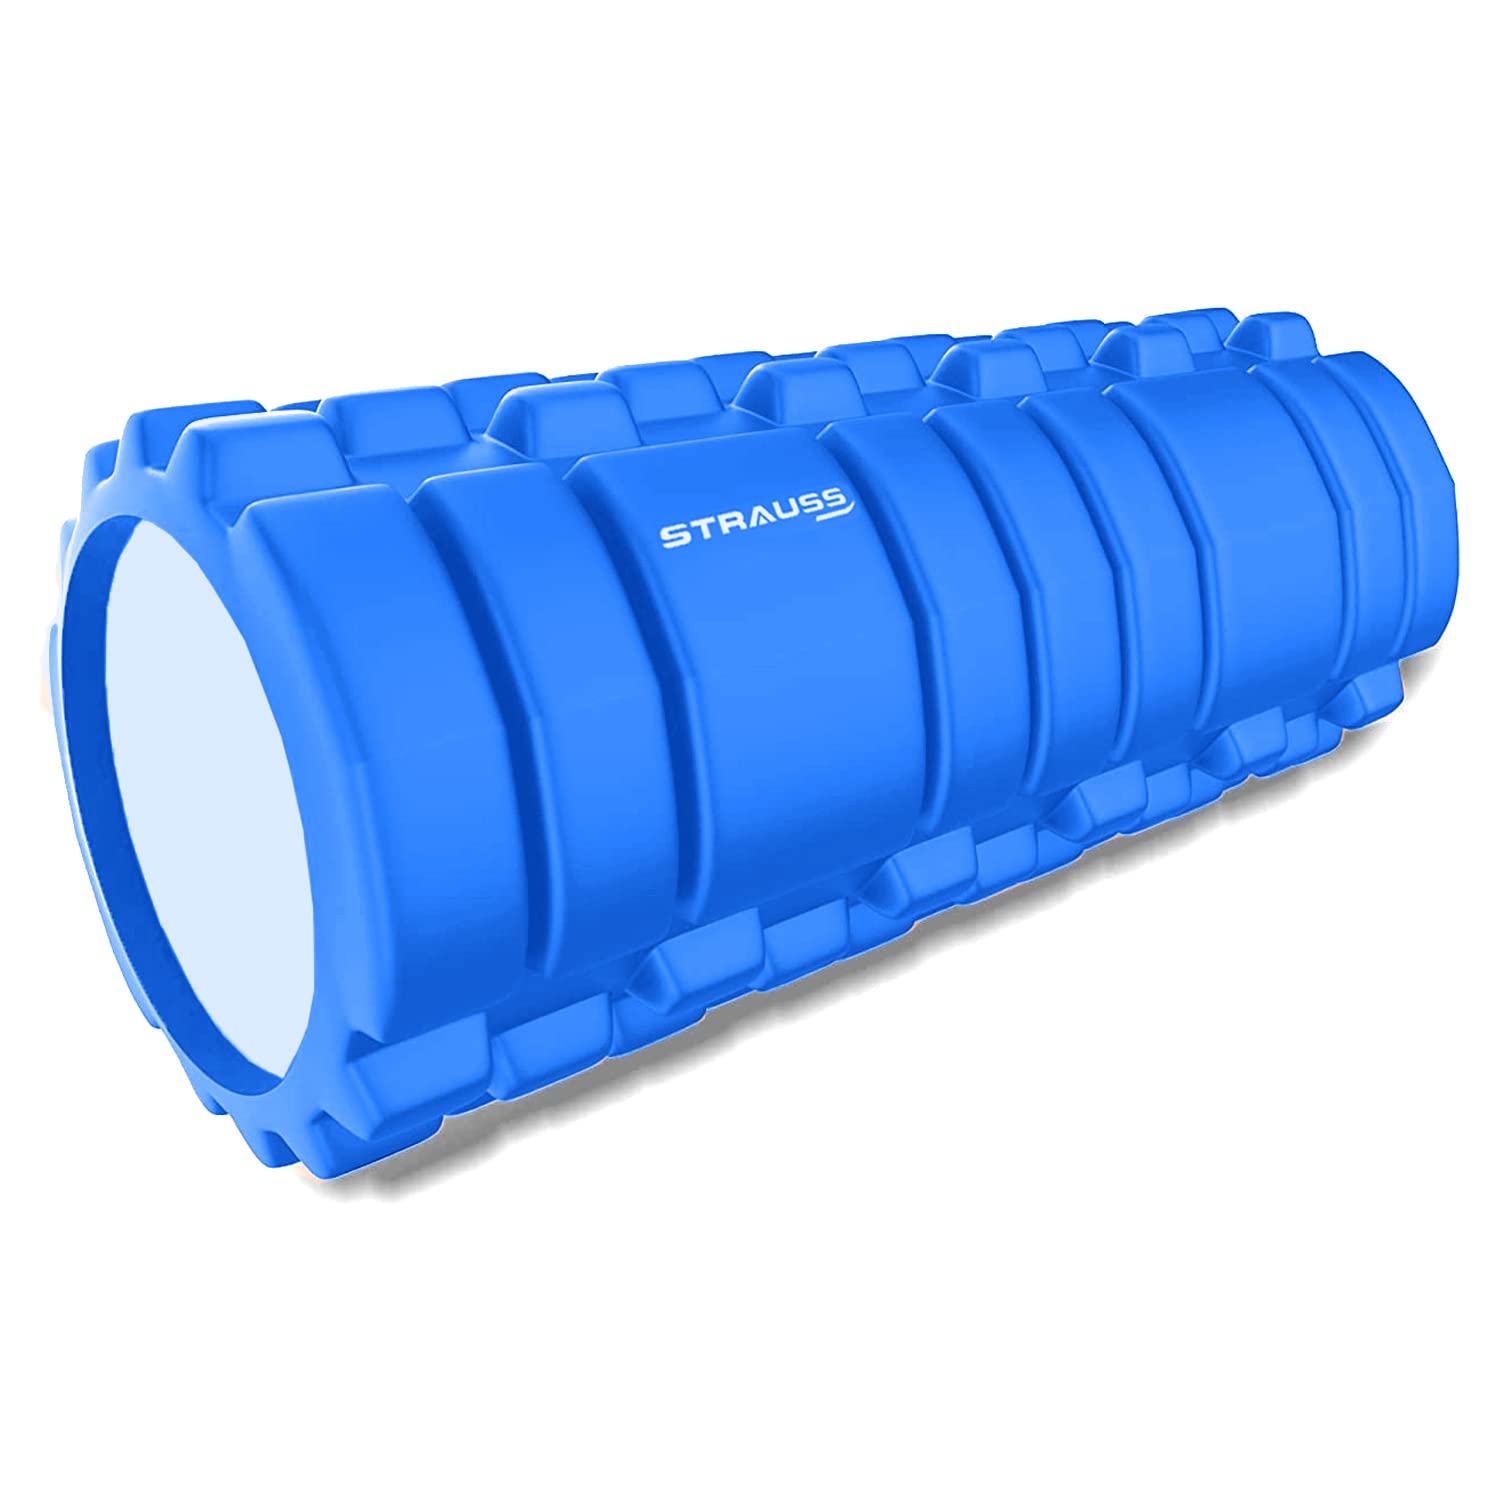 Available in Blue & Black Strauss High Density Foam Roller, 30cm